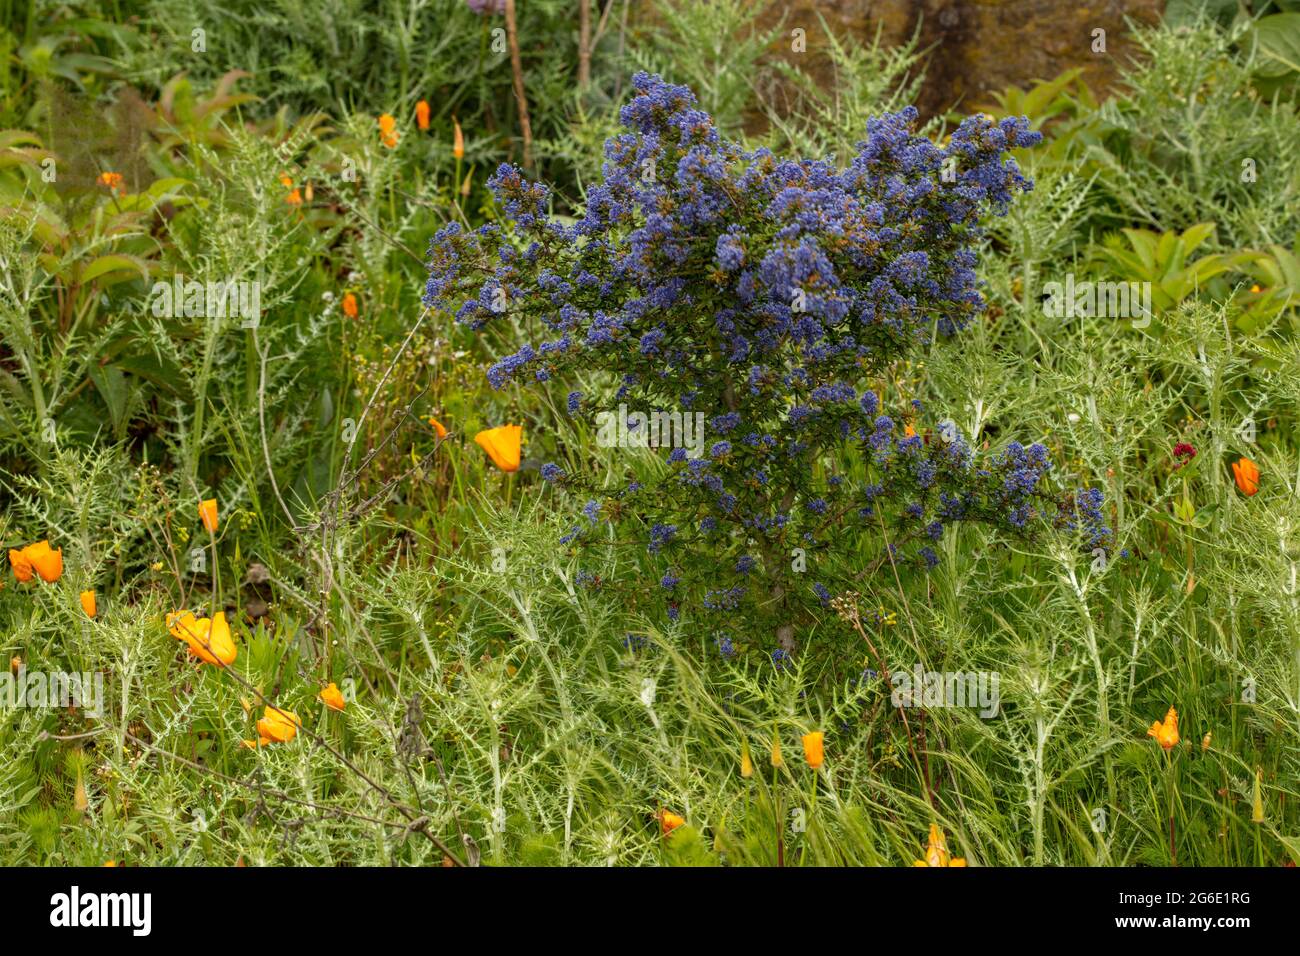 Ceanothus 'Dark Star’, Californian lilac 'Dark Star' flowering in a natural garden setting Stock Photo